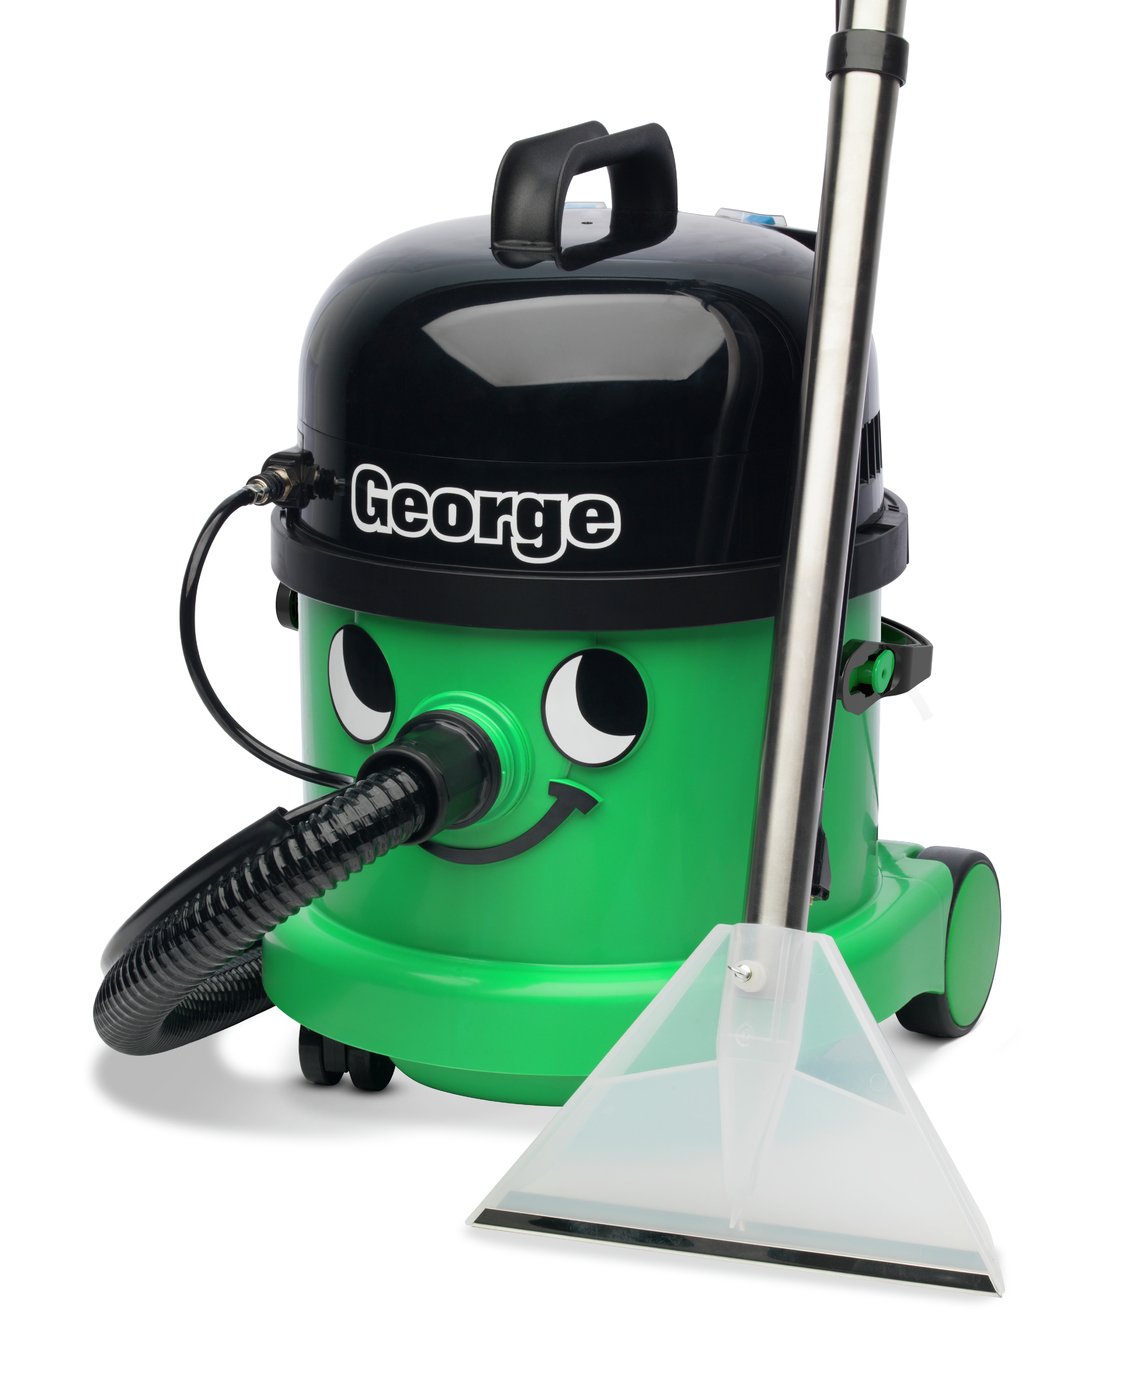 George GVE370 Wet & Dry Bagged Cylinder Vacuum Cleaner